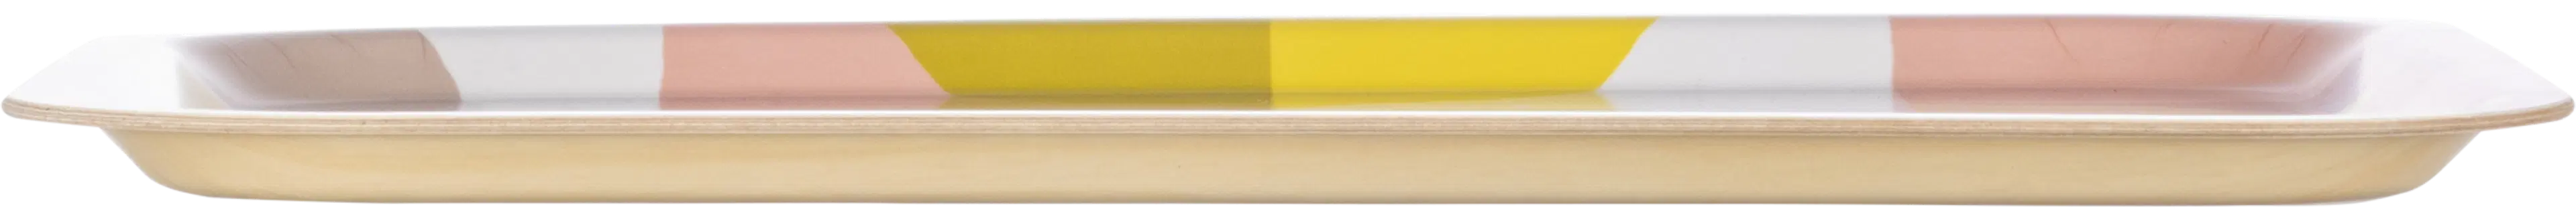 Pentik Sitruuna tarjotin 36x28 cm, keltainen